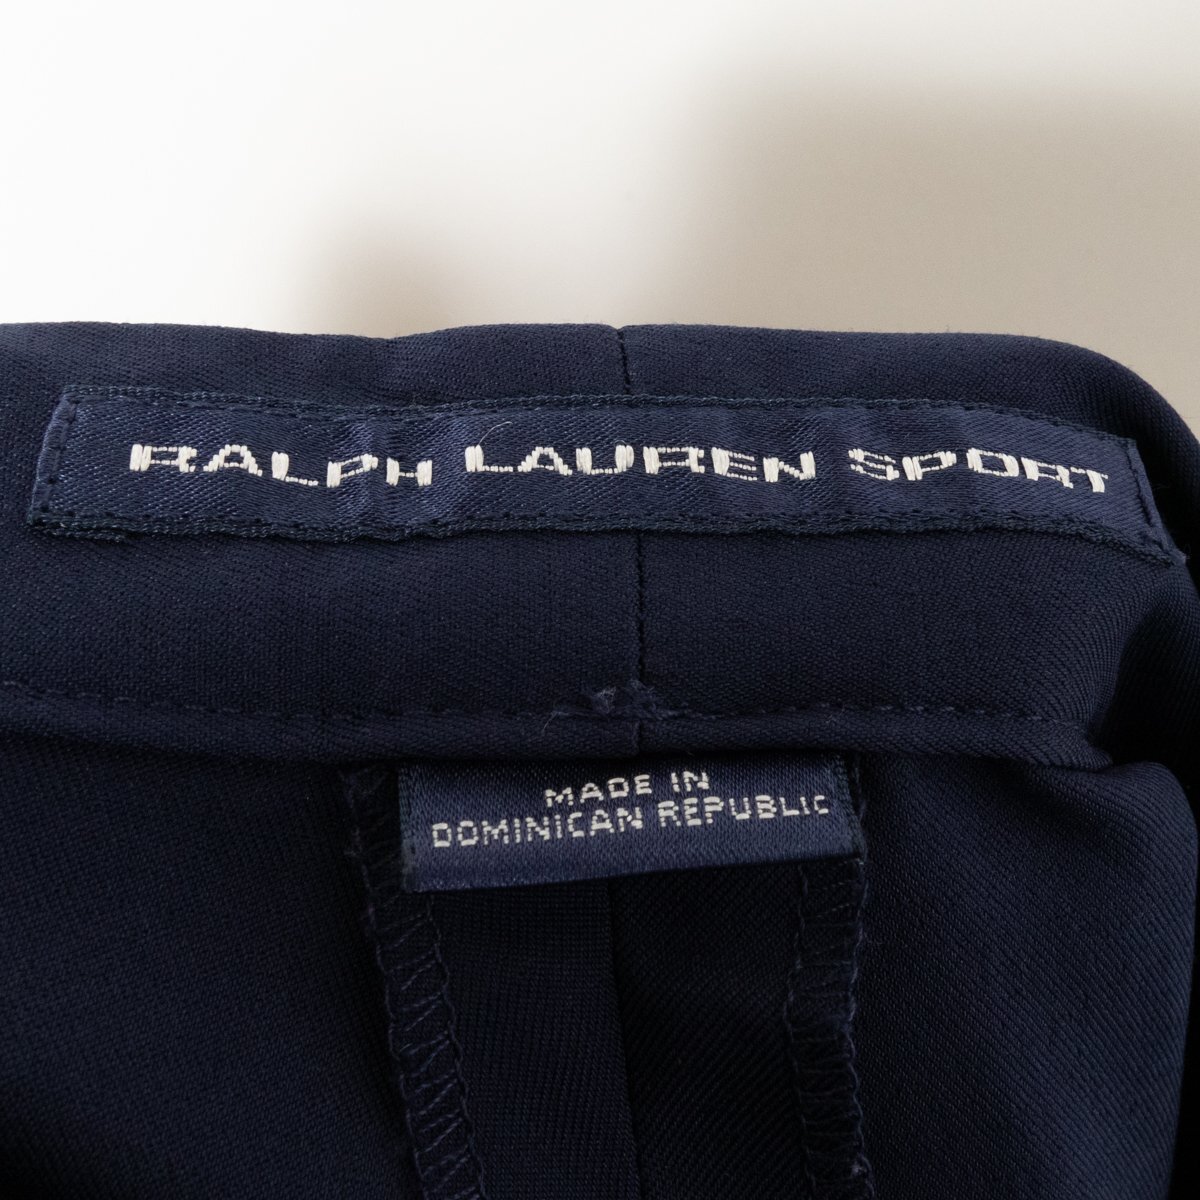 RALPH LAUREN SPORT Ralph Lauren sportsline шорты низ Logo вышивка 10 полиэстер темно-синий темно-синий спорт одежда 